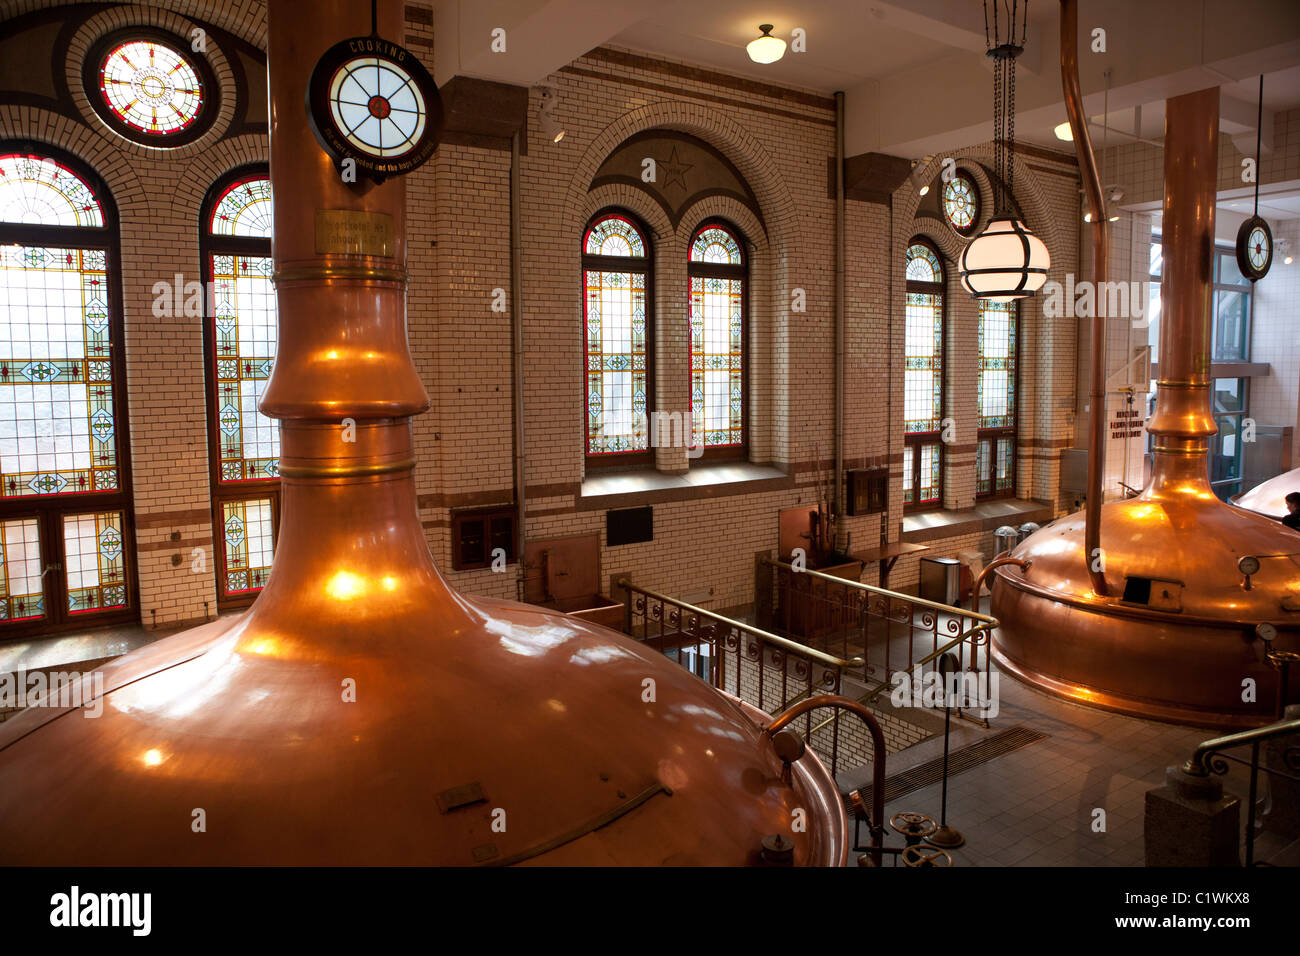 Overview of beer production vats in historic Heineken brewery, Amsterdam, Netherlands. Stock Photo